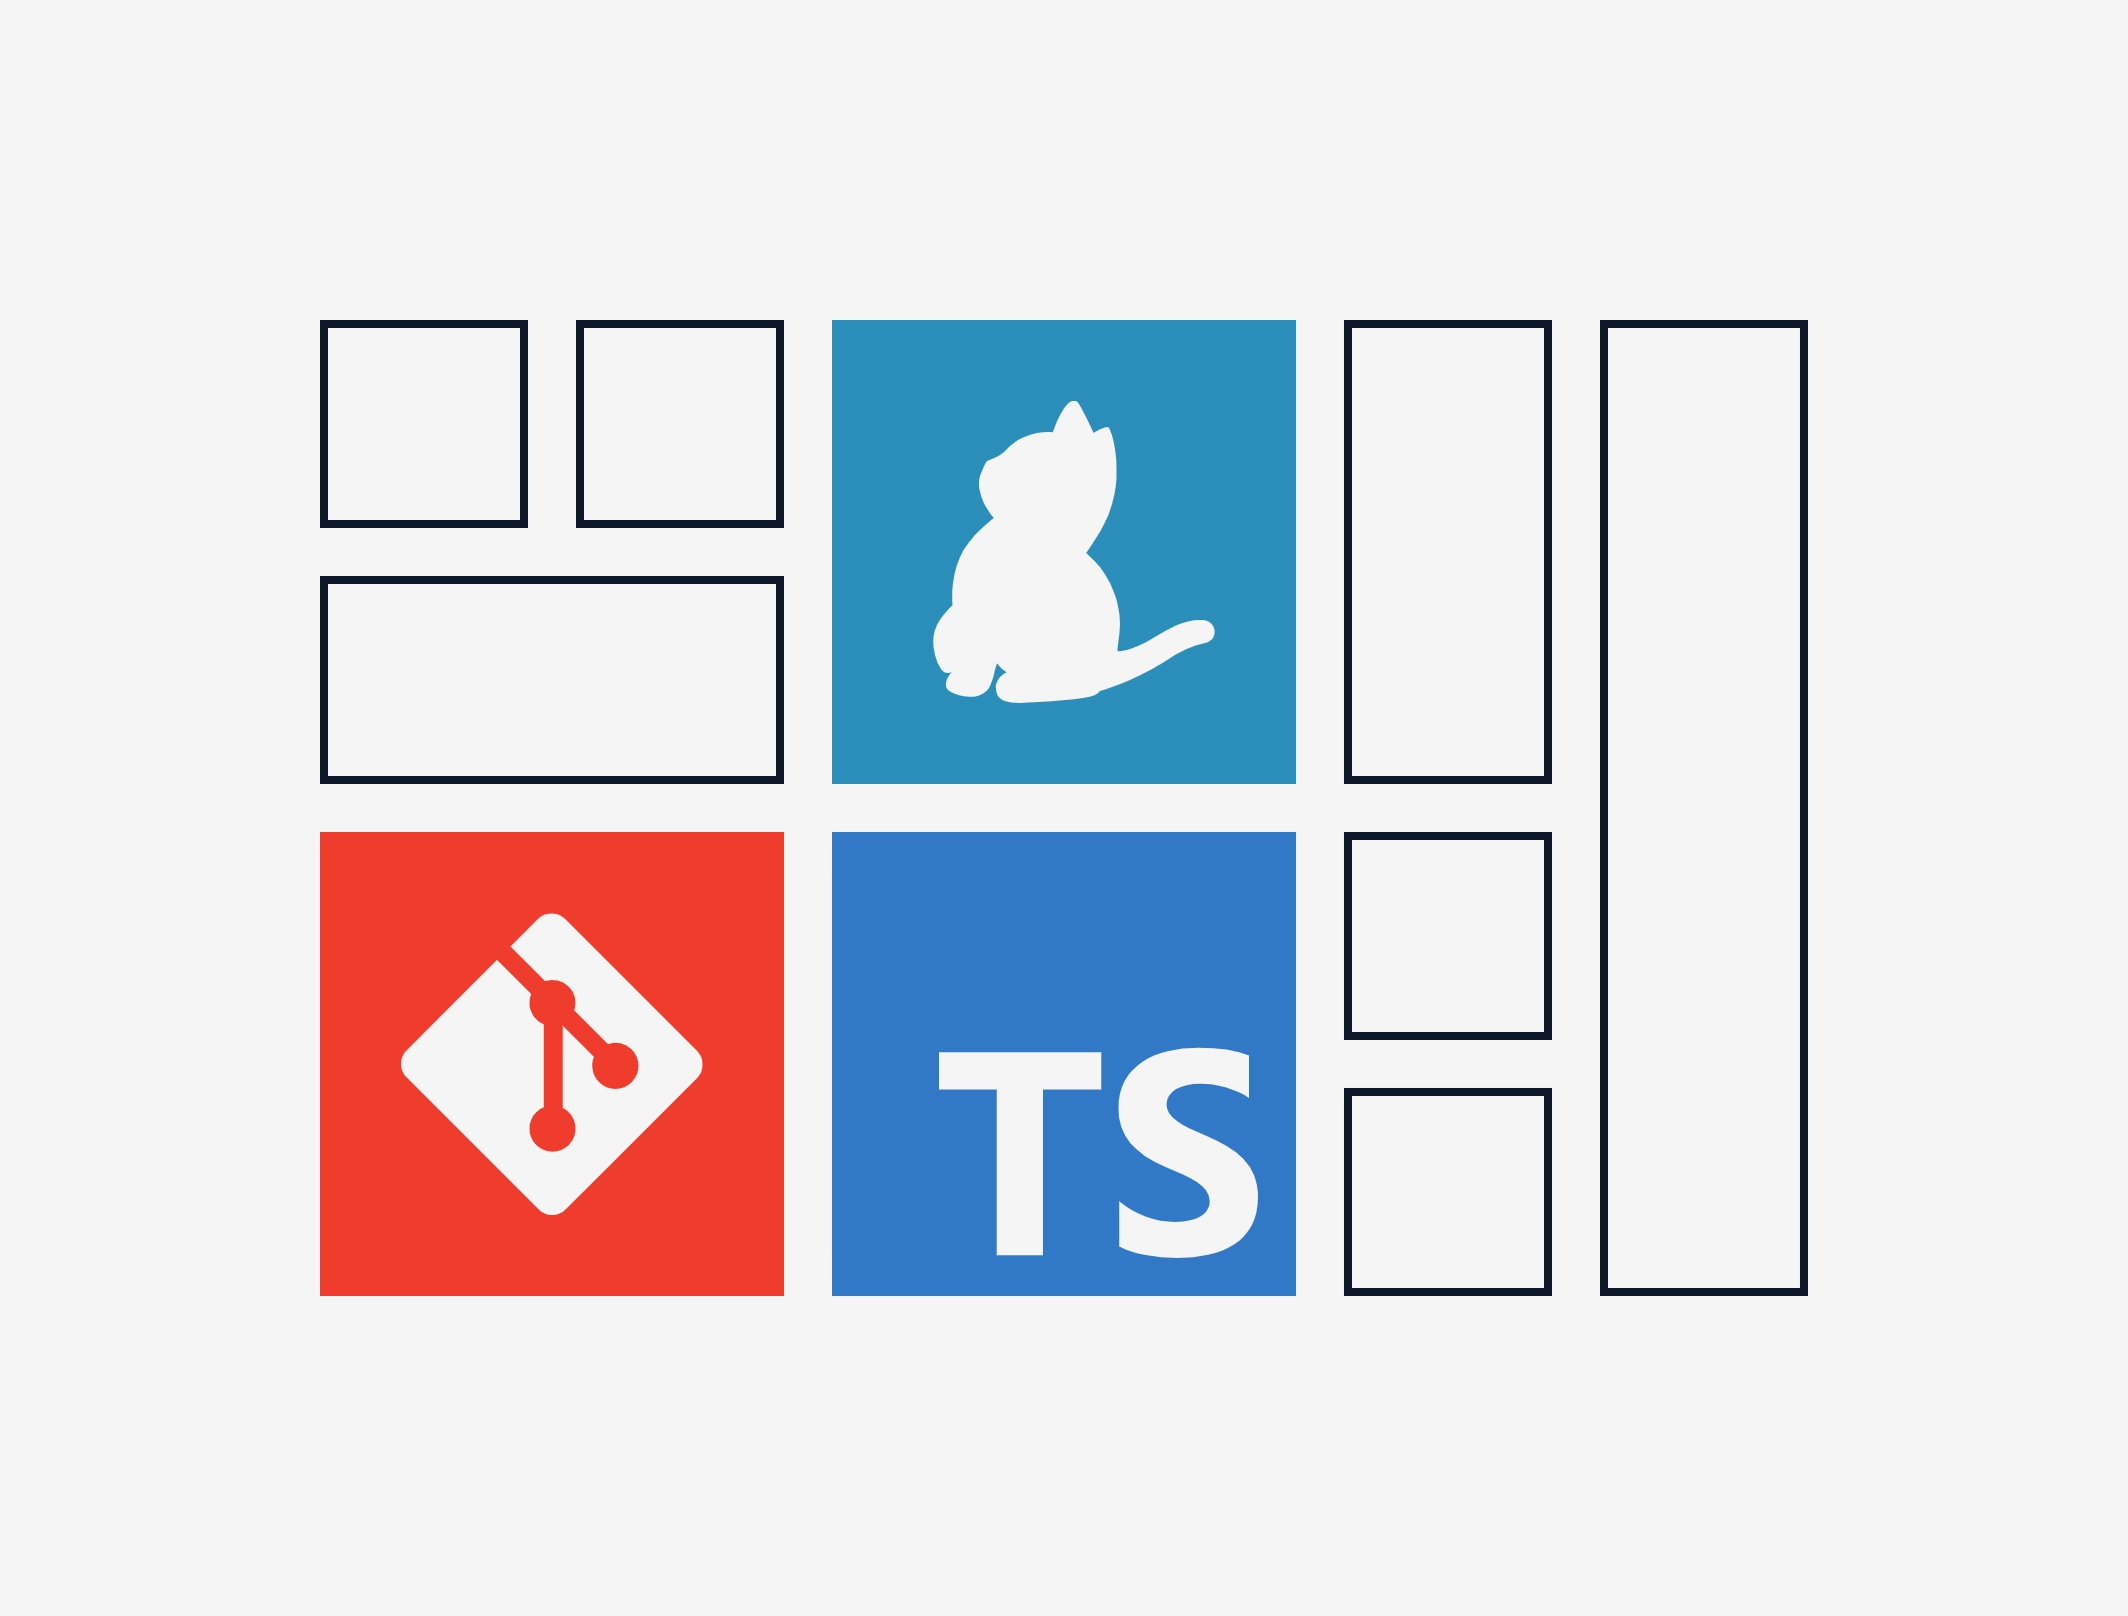 Logos of Yarn, Git and TypeScript arranged like a bento box